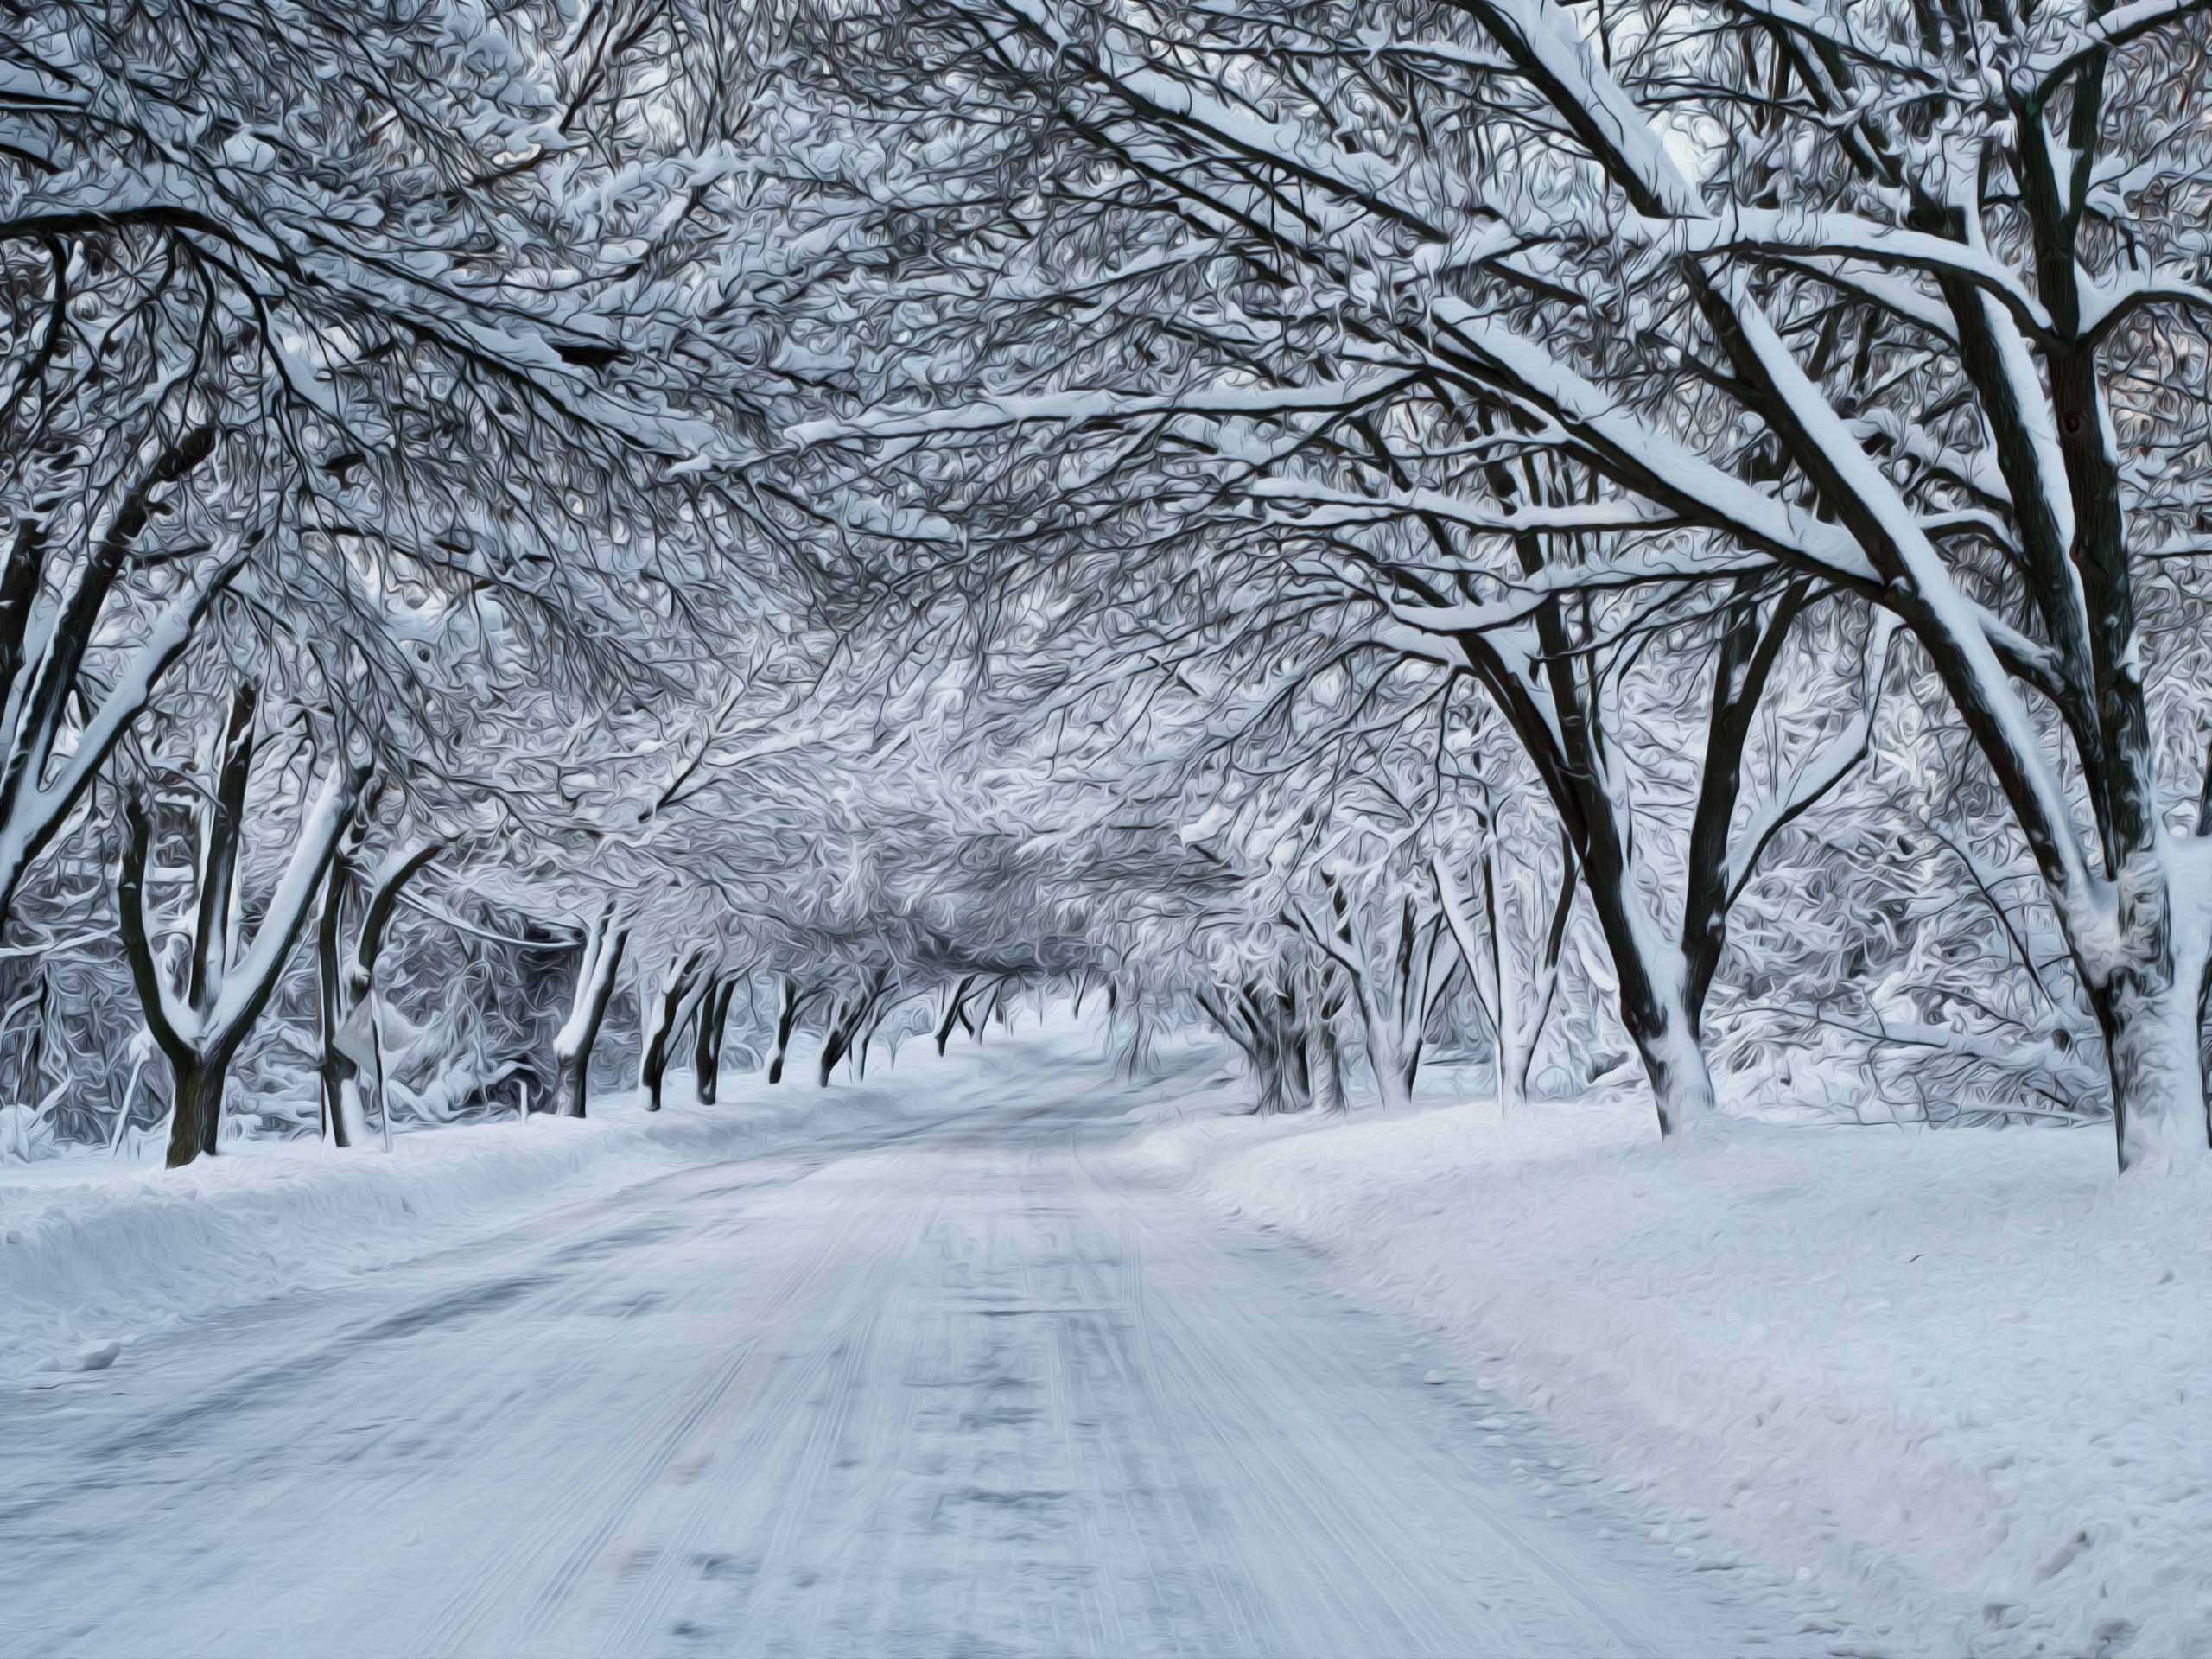 Winter Snow Scenes Free Vector Download